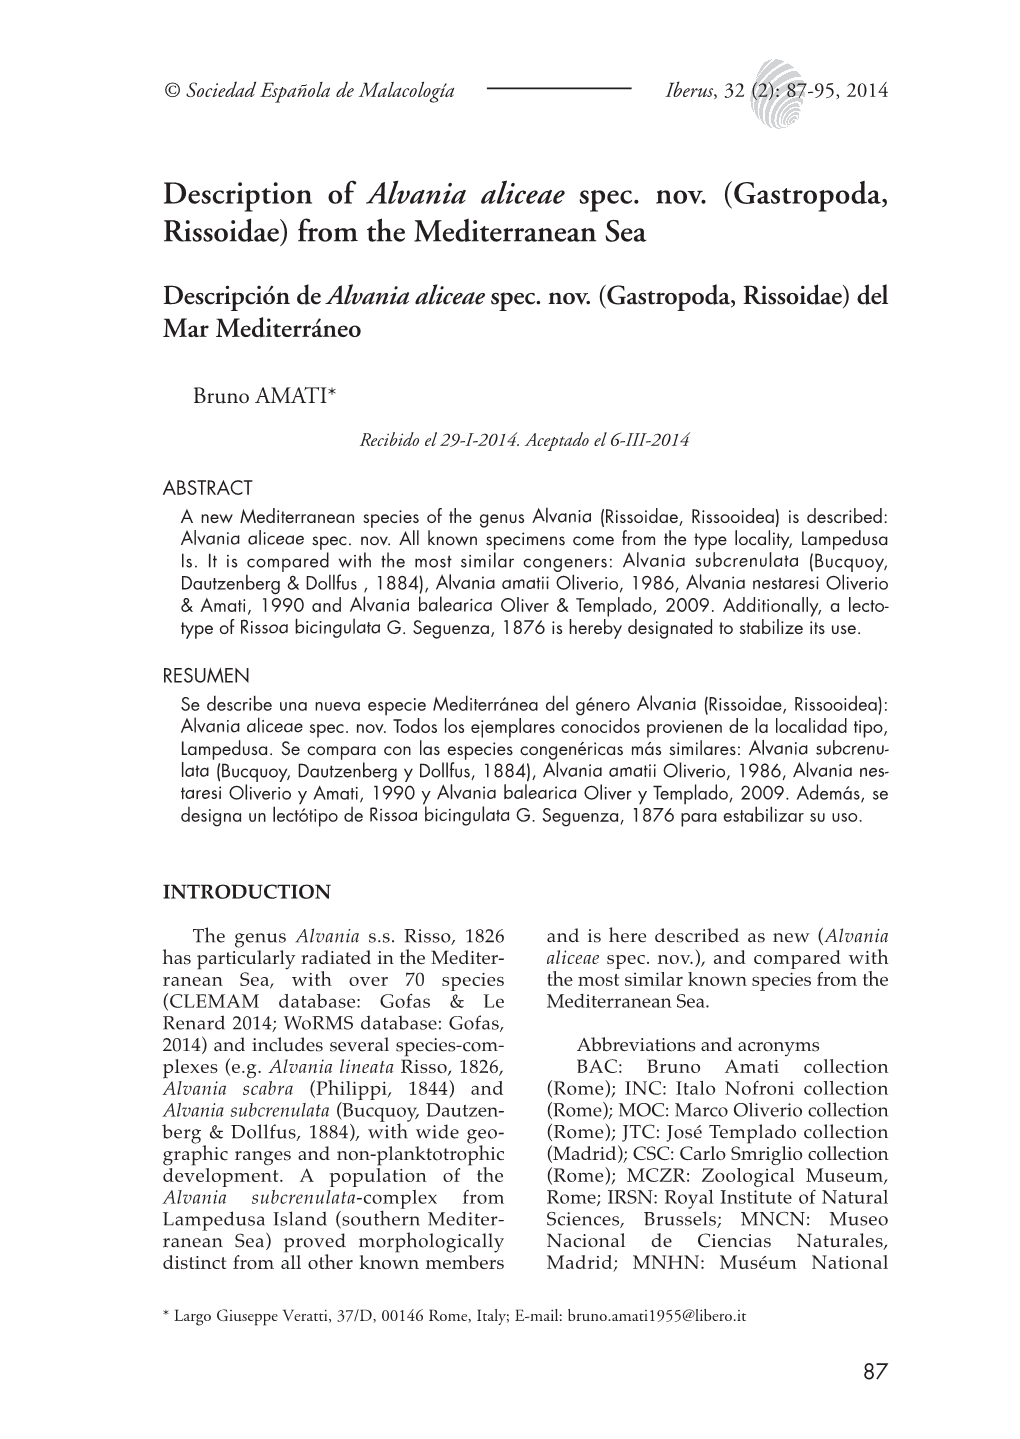 Description of Alvania Aliceae Spec. Nov. (Gastropoda, Rissoidae) from the Mediterranean Sea